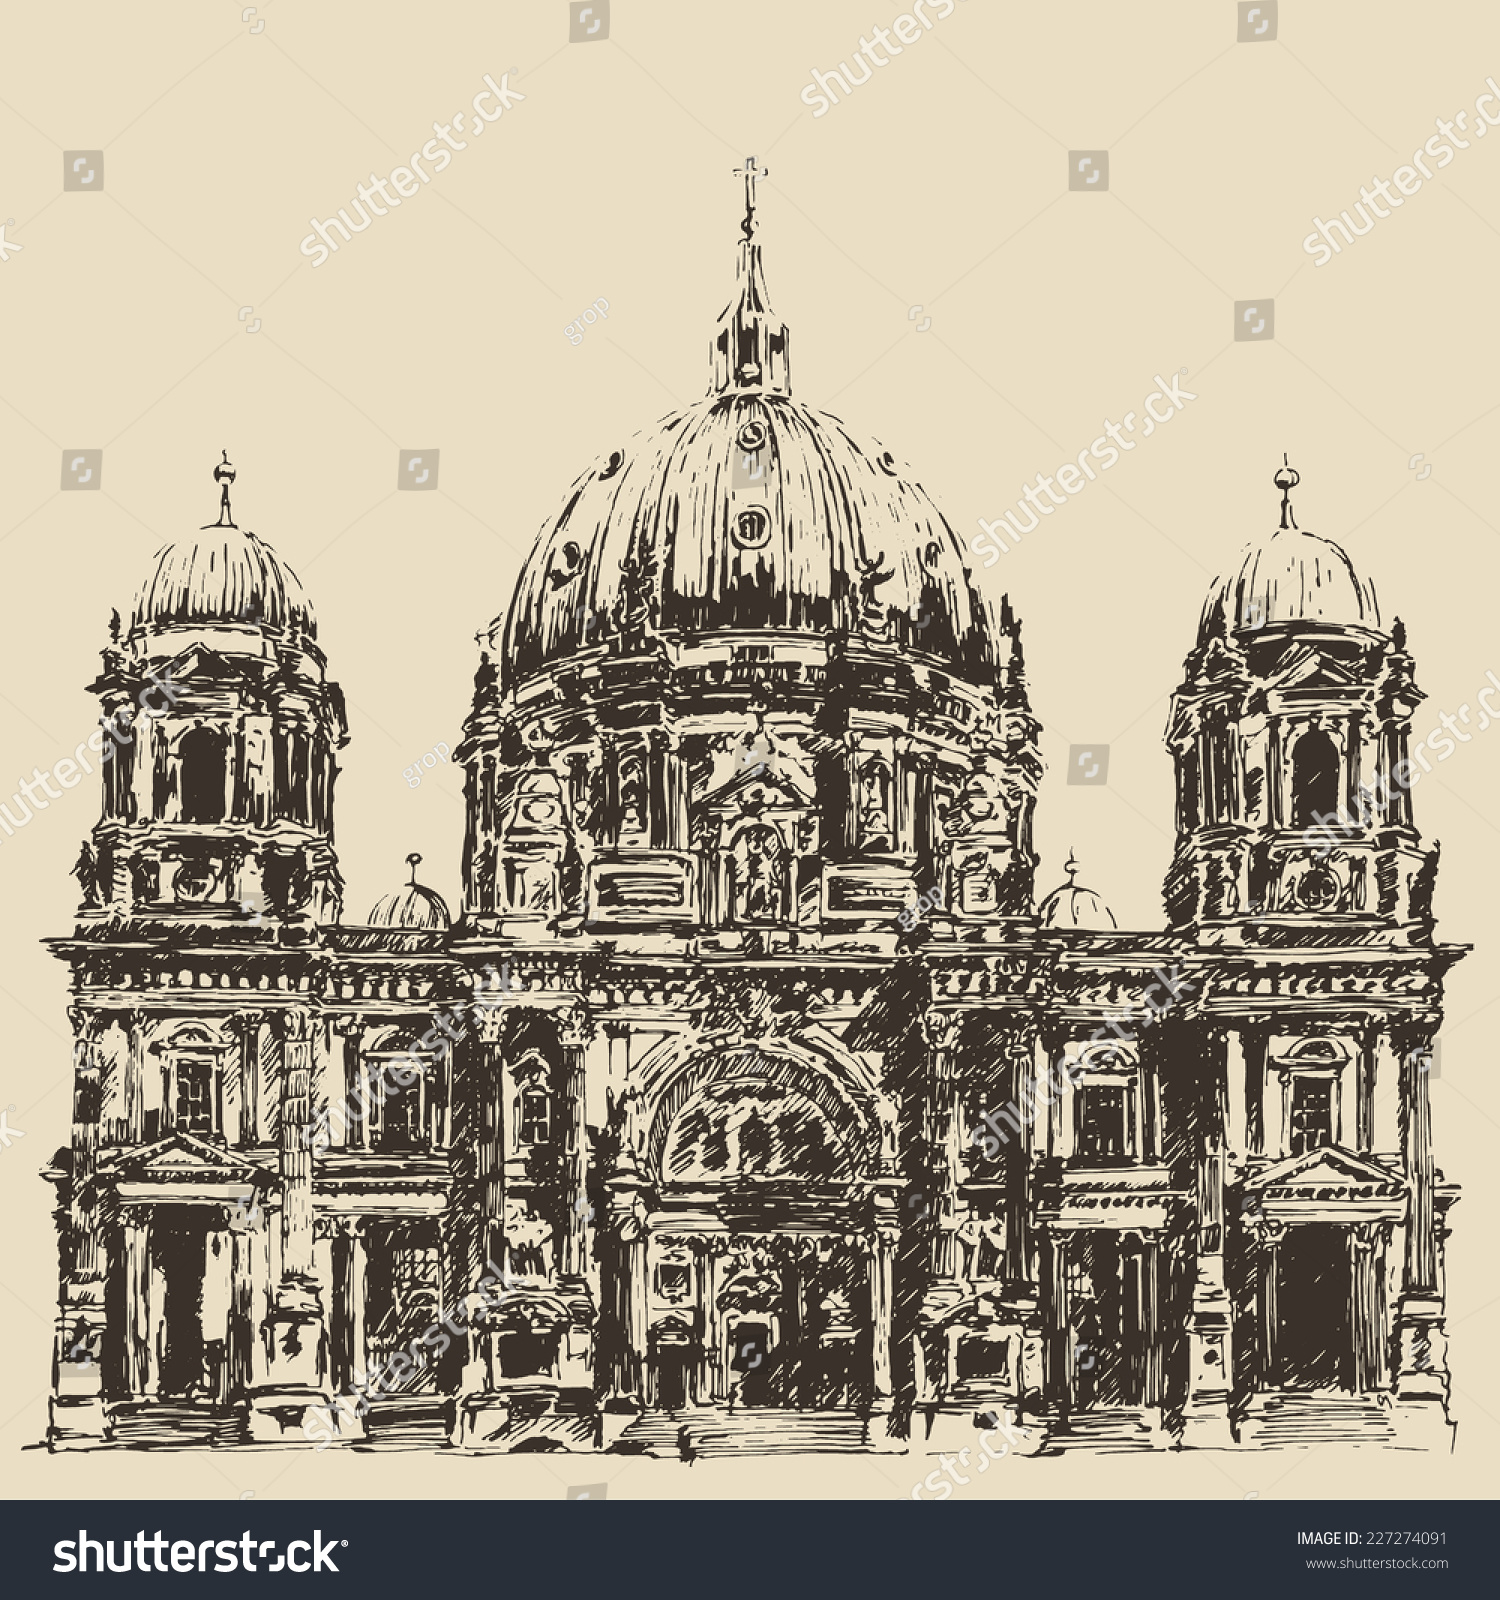 SVG of Berlin Cathedral. Berliner Dom, Germany. Hand drawn illustration. Engraved style. svg